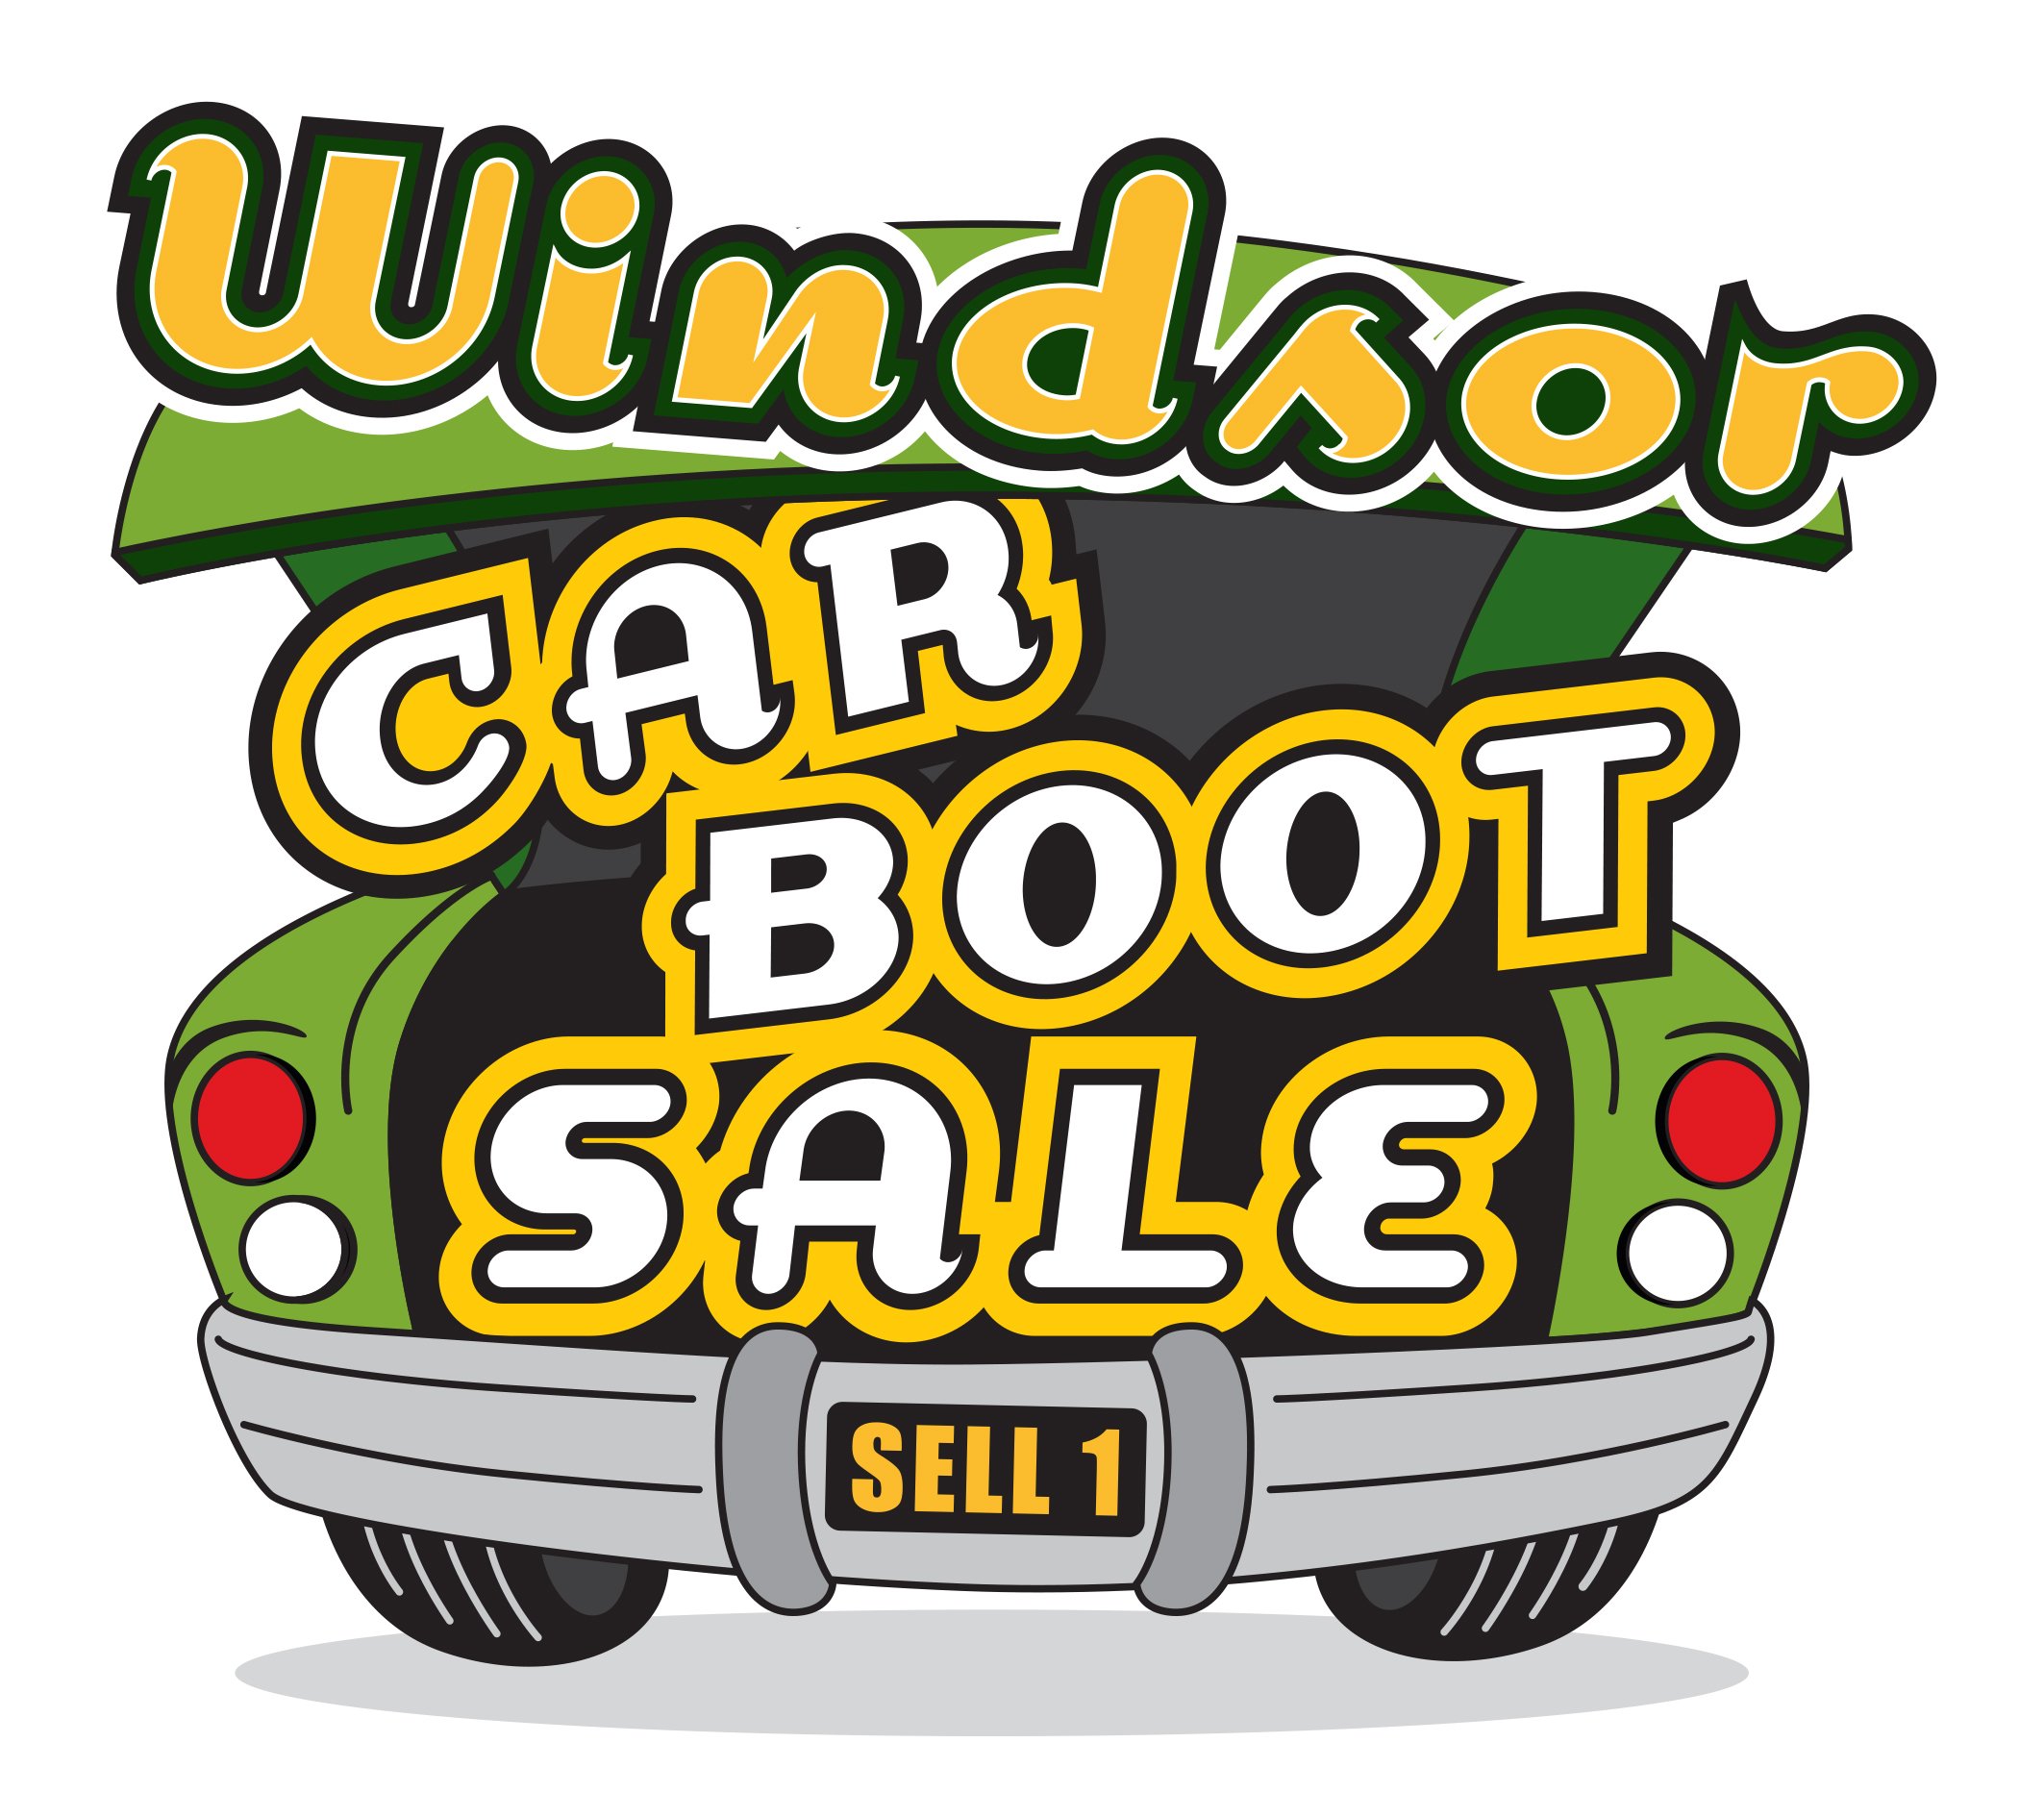 Windsor CarBoot Sale (@WindsorCarBoot) / Twitter